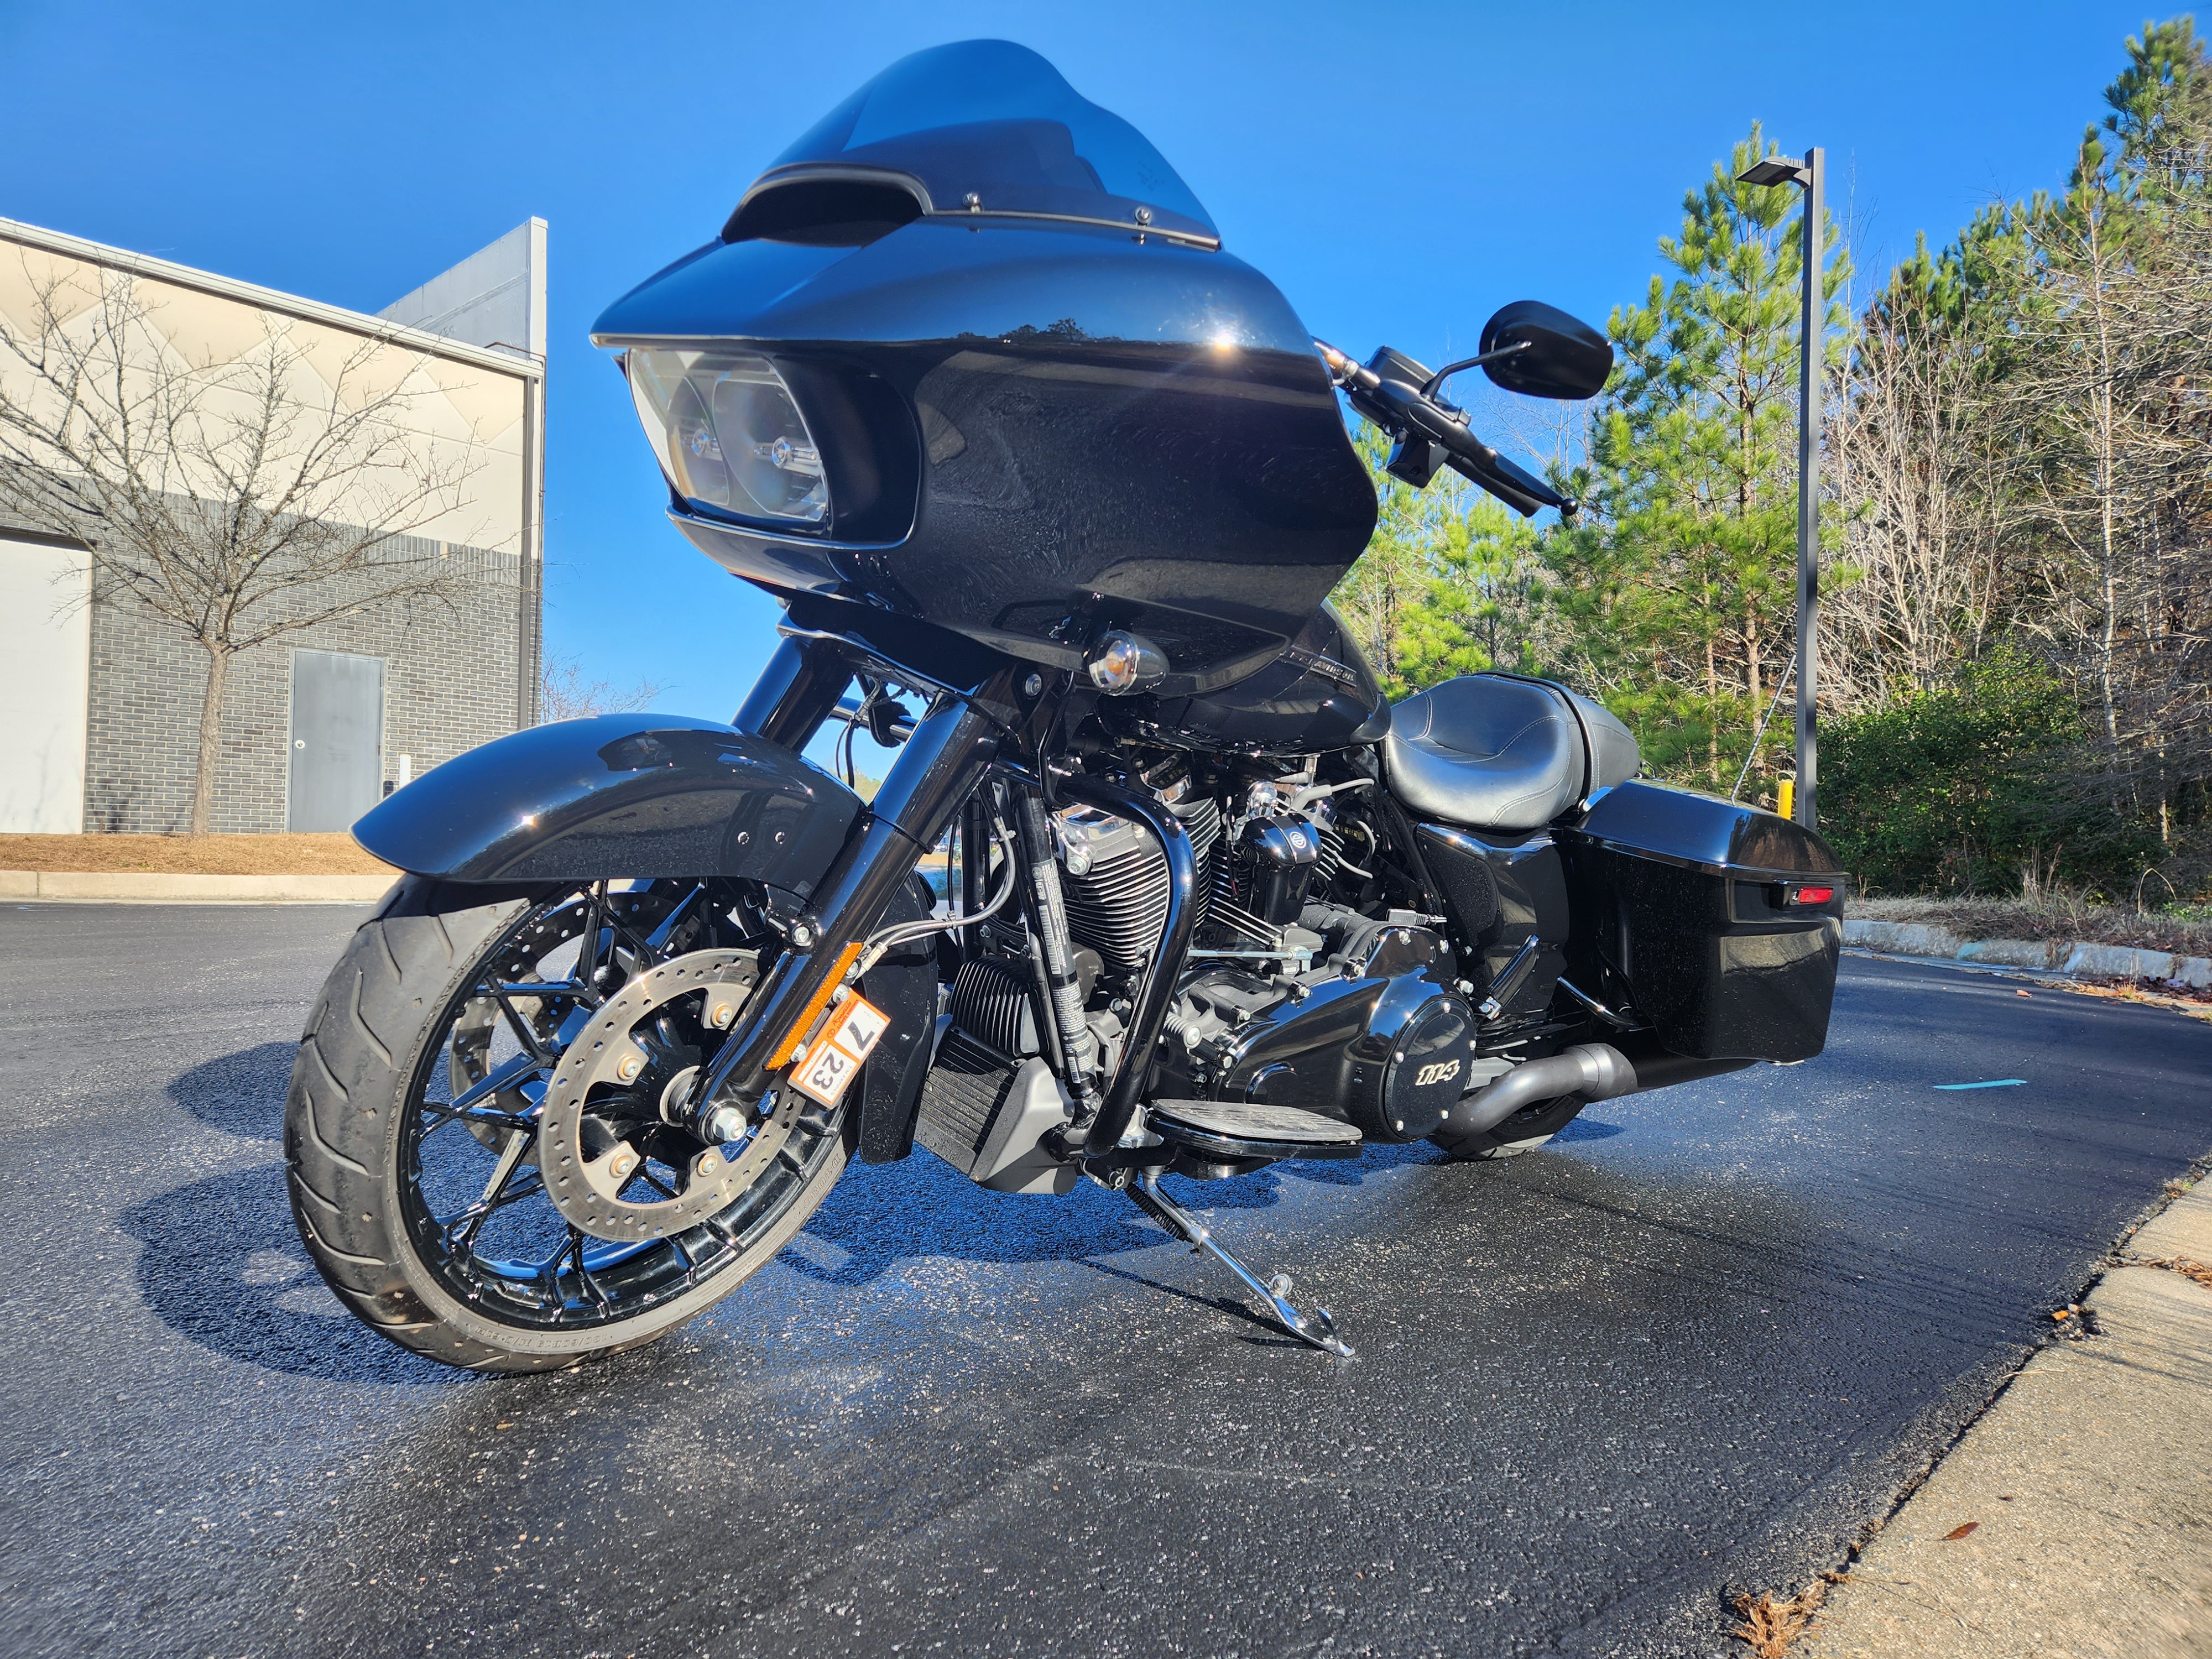 2020 Harley-Davidson Touring Road Glide Special at Steel Horse Harley-Davidson®